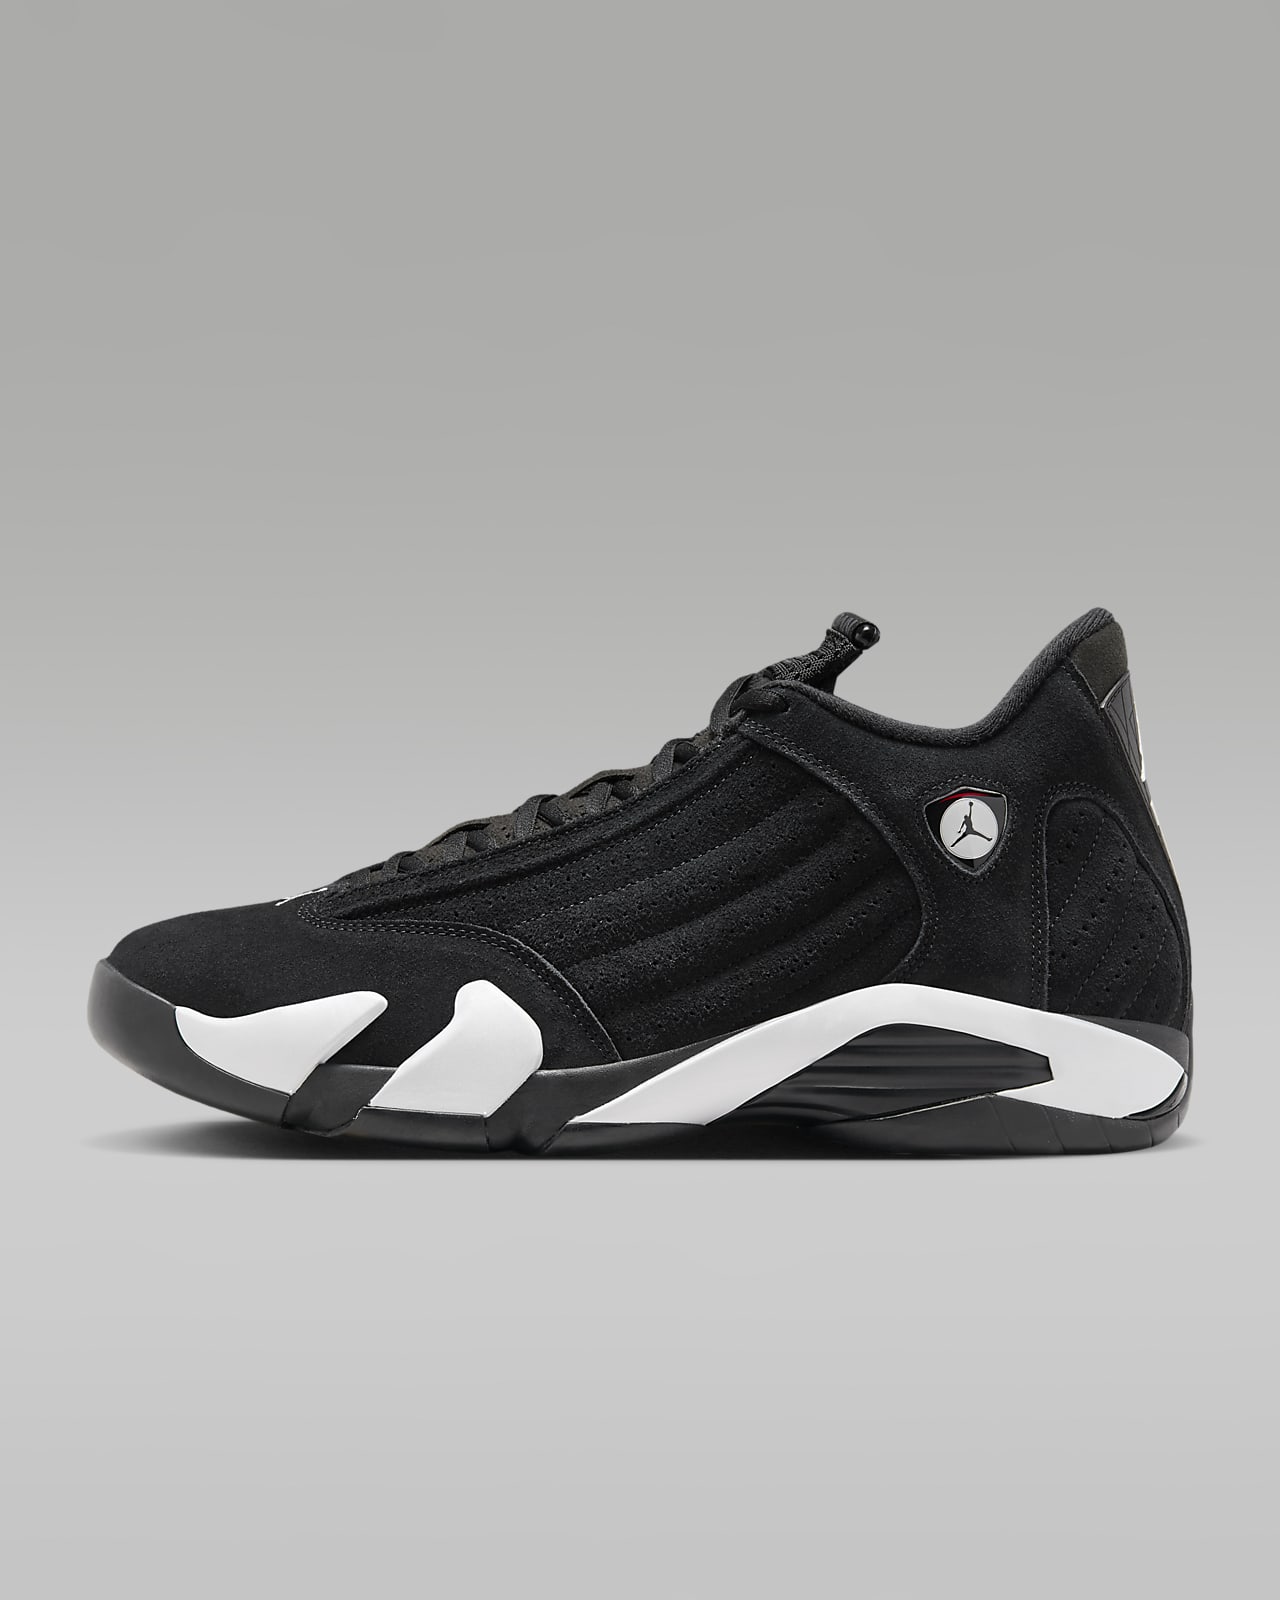 Air Jordan 14 "Black/White" Men's Shoes